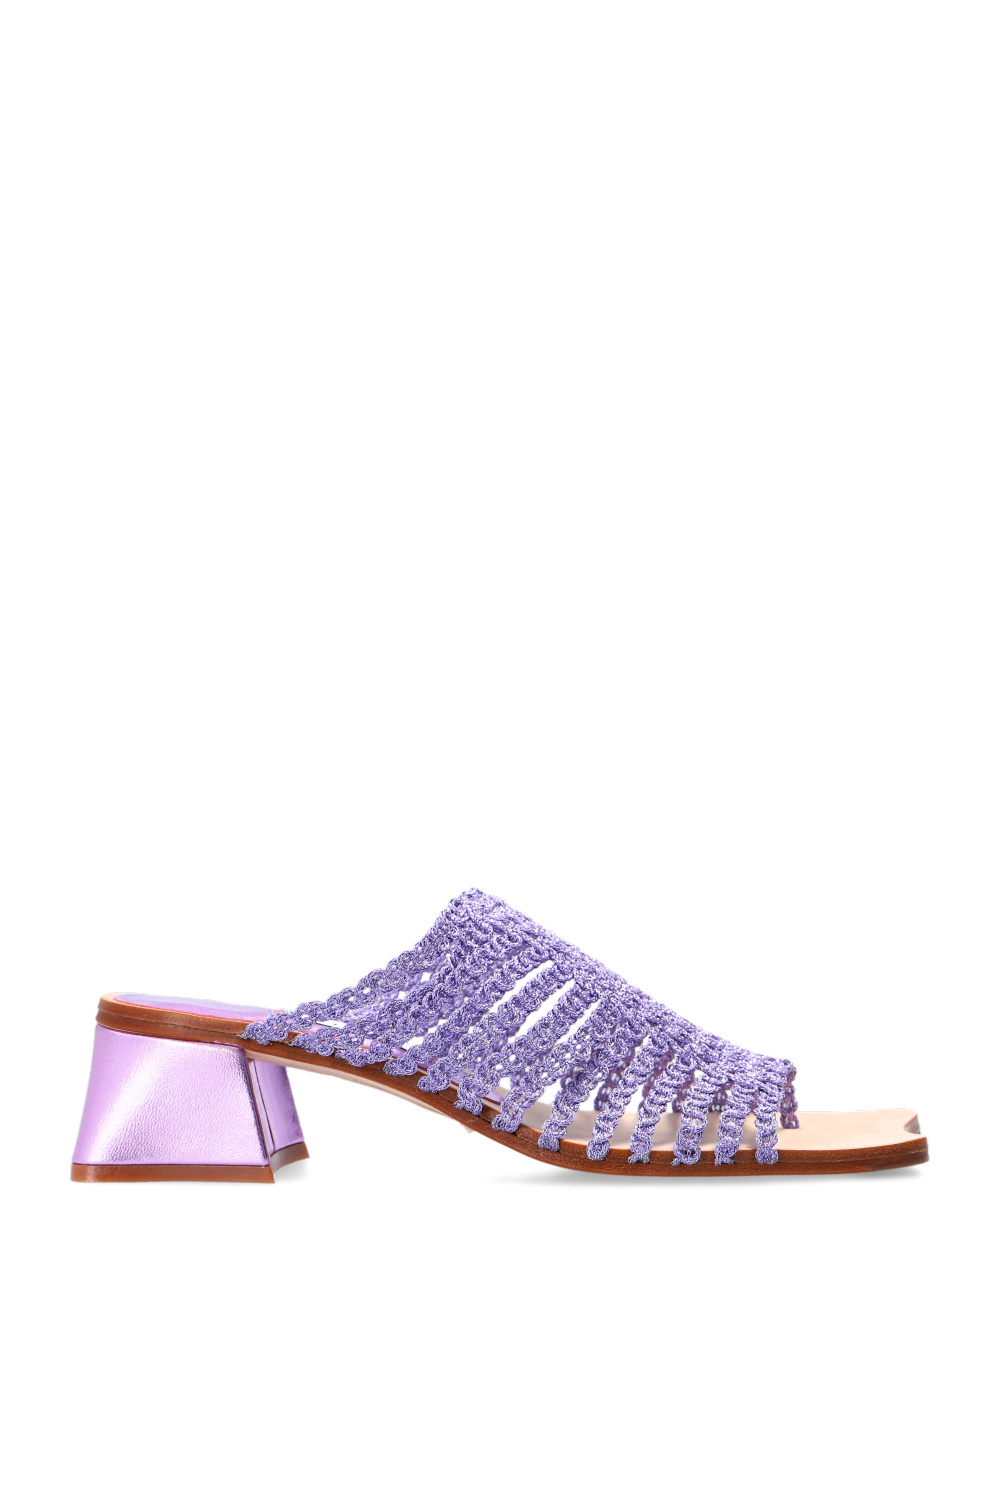 Miista ‘Haley’ heeled flip-flops